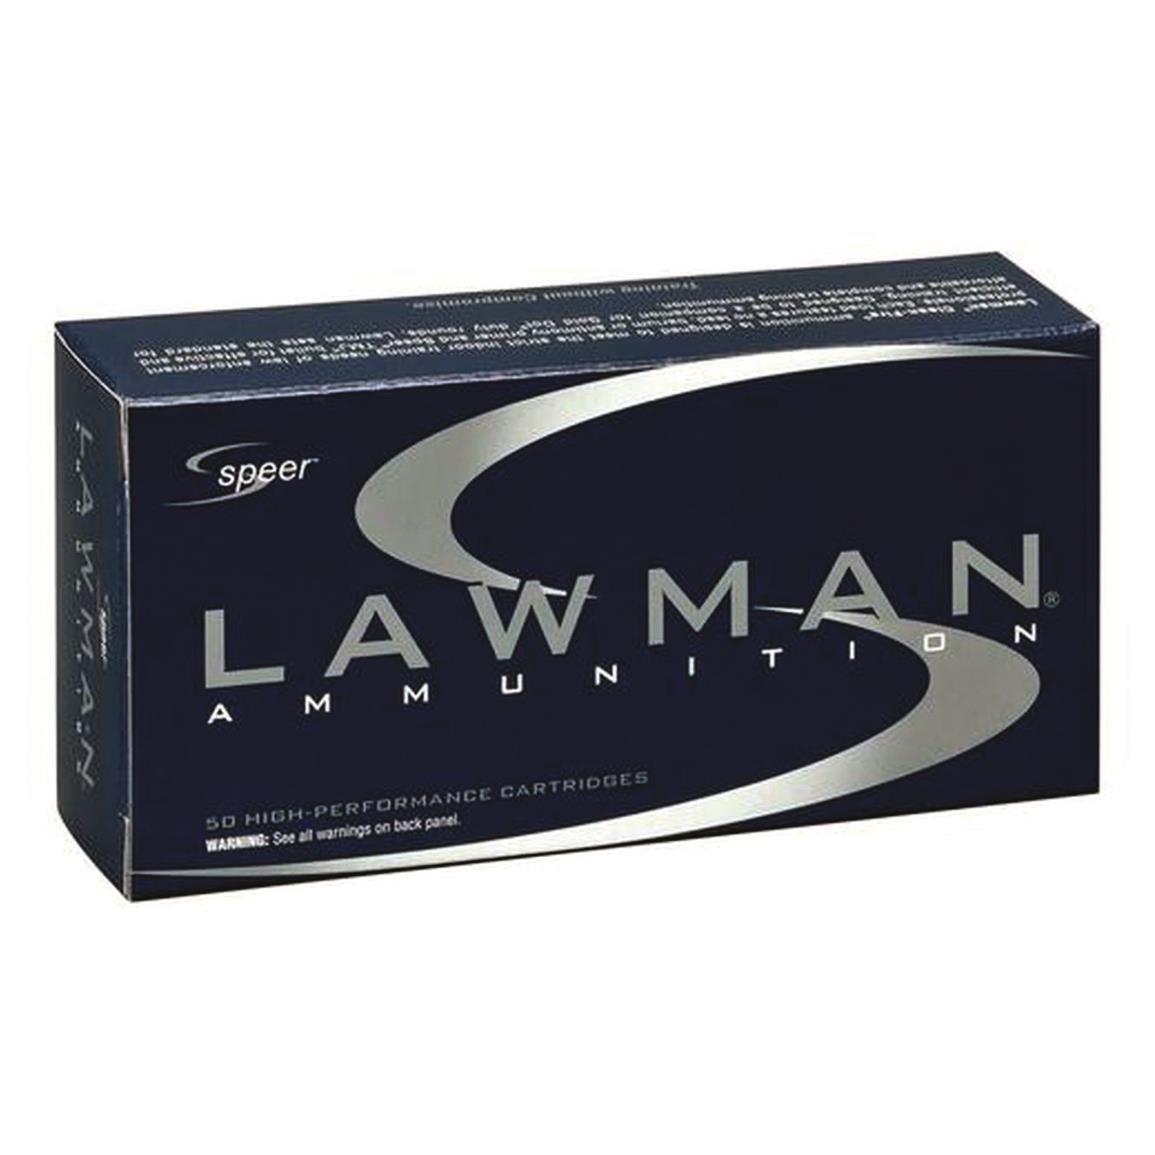 Speer Lawman, .40 S&W, TMJ, 180 Grain, 50 Rounds